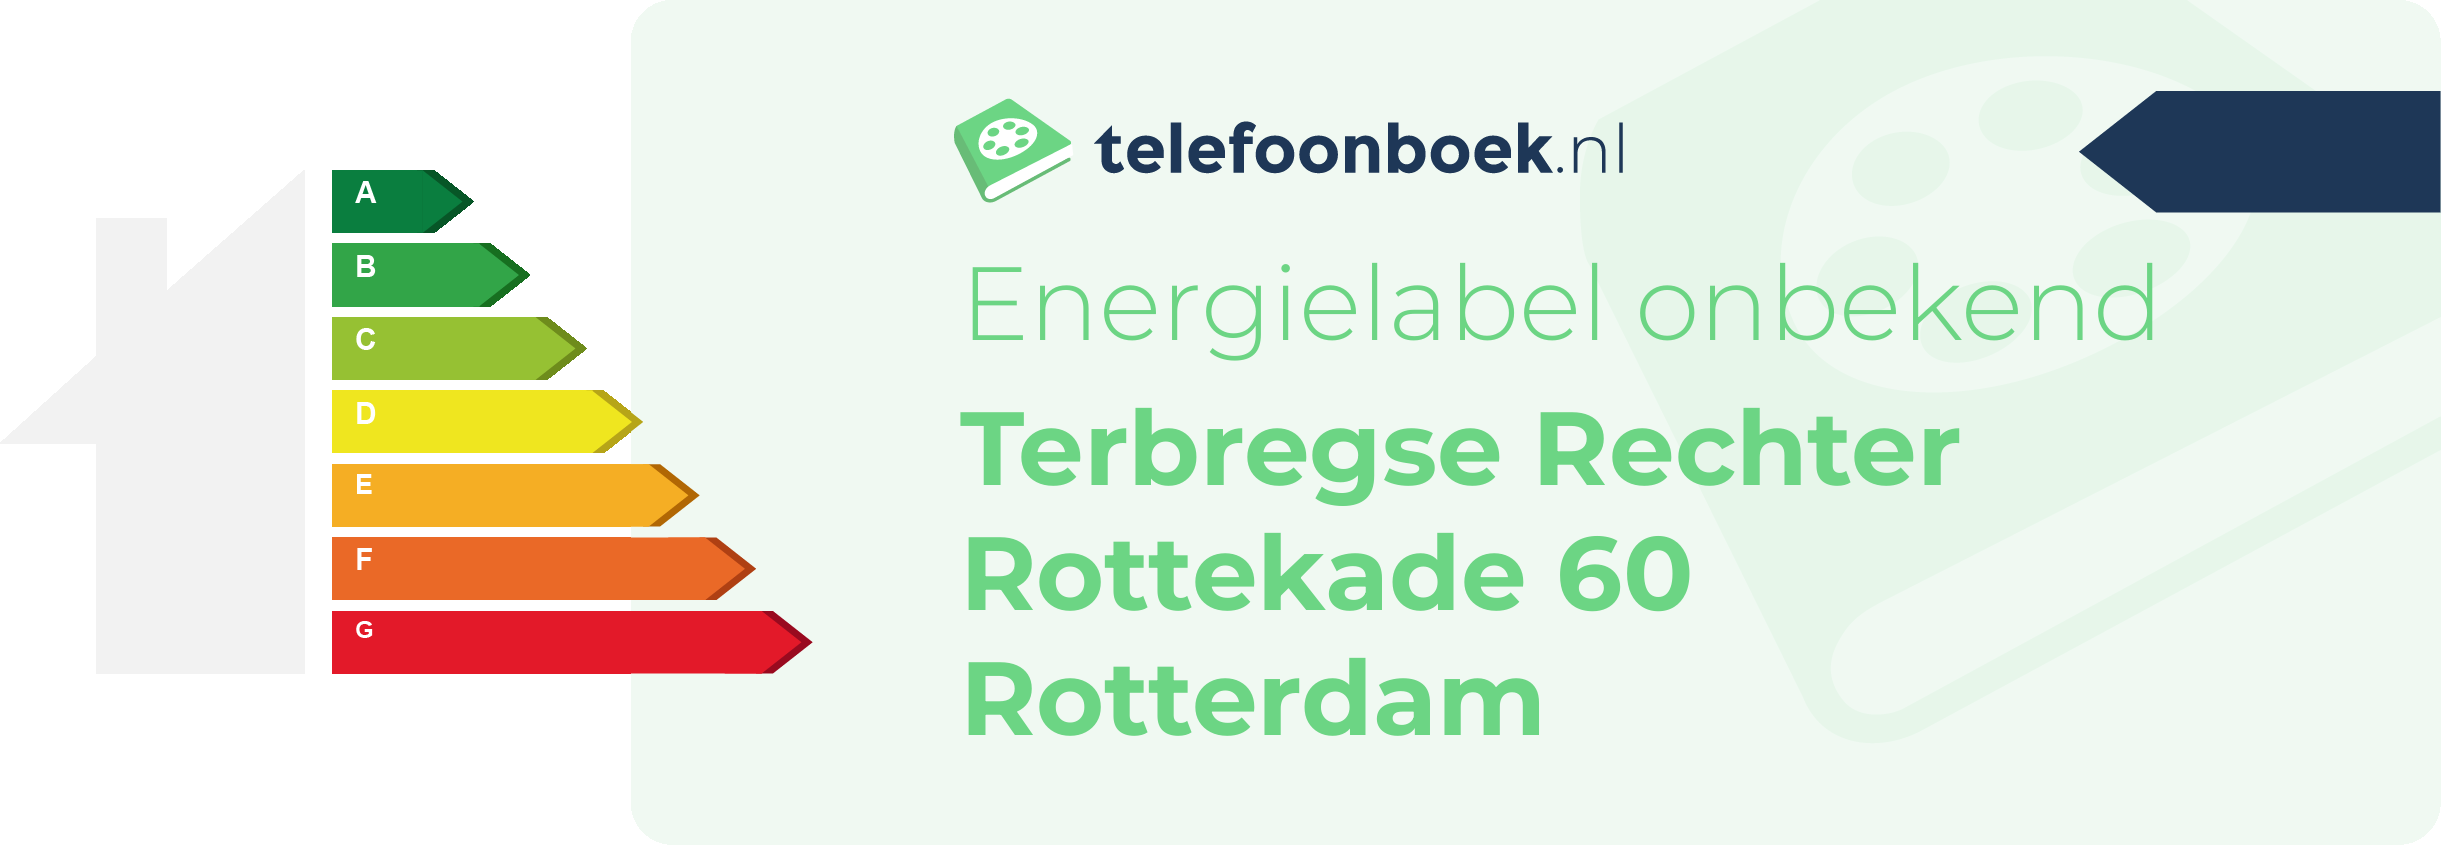 Energielabel Terbregse Rechter Rottekade 60 Rotterdam